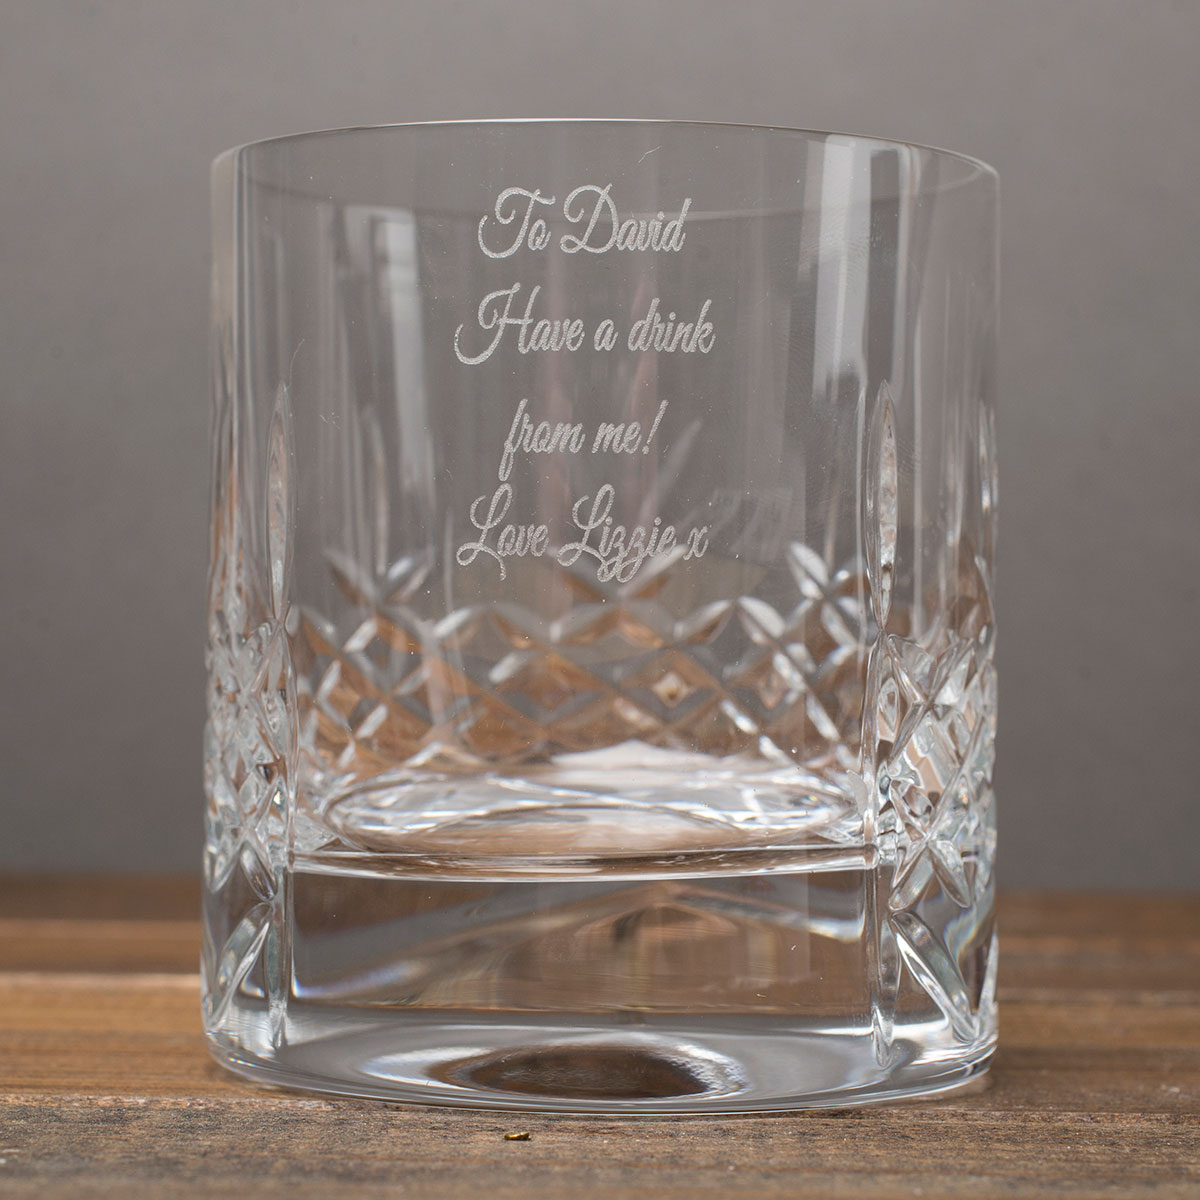 Engraved Crystal Tumbler and Vodka Gift Set